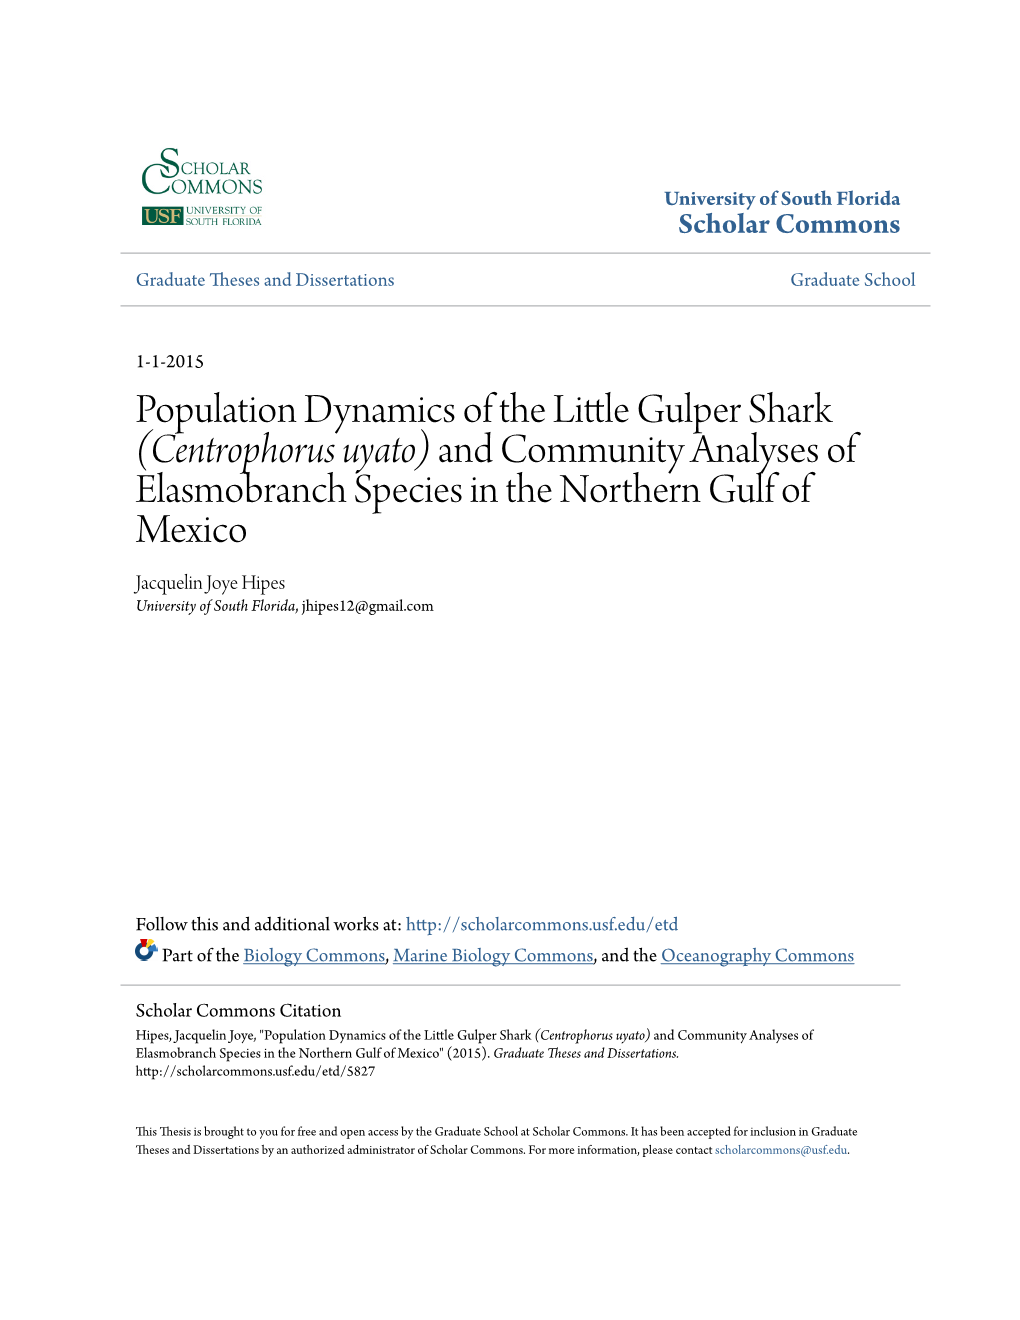 Population Dynamics of the Little Gulper Shark (Centrophorus Uyato) and Community Analyses